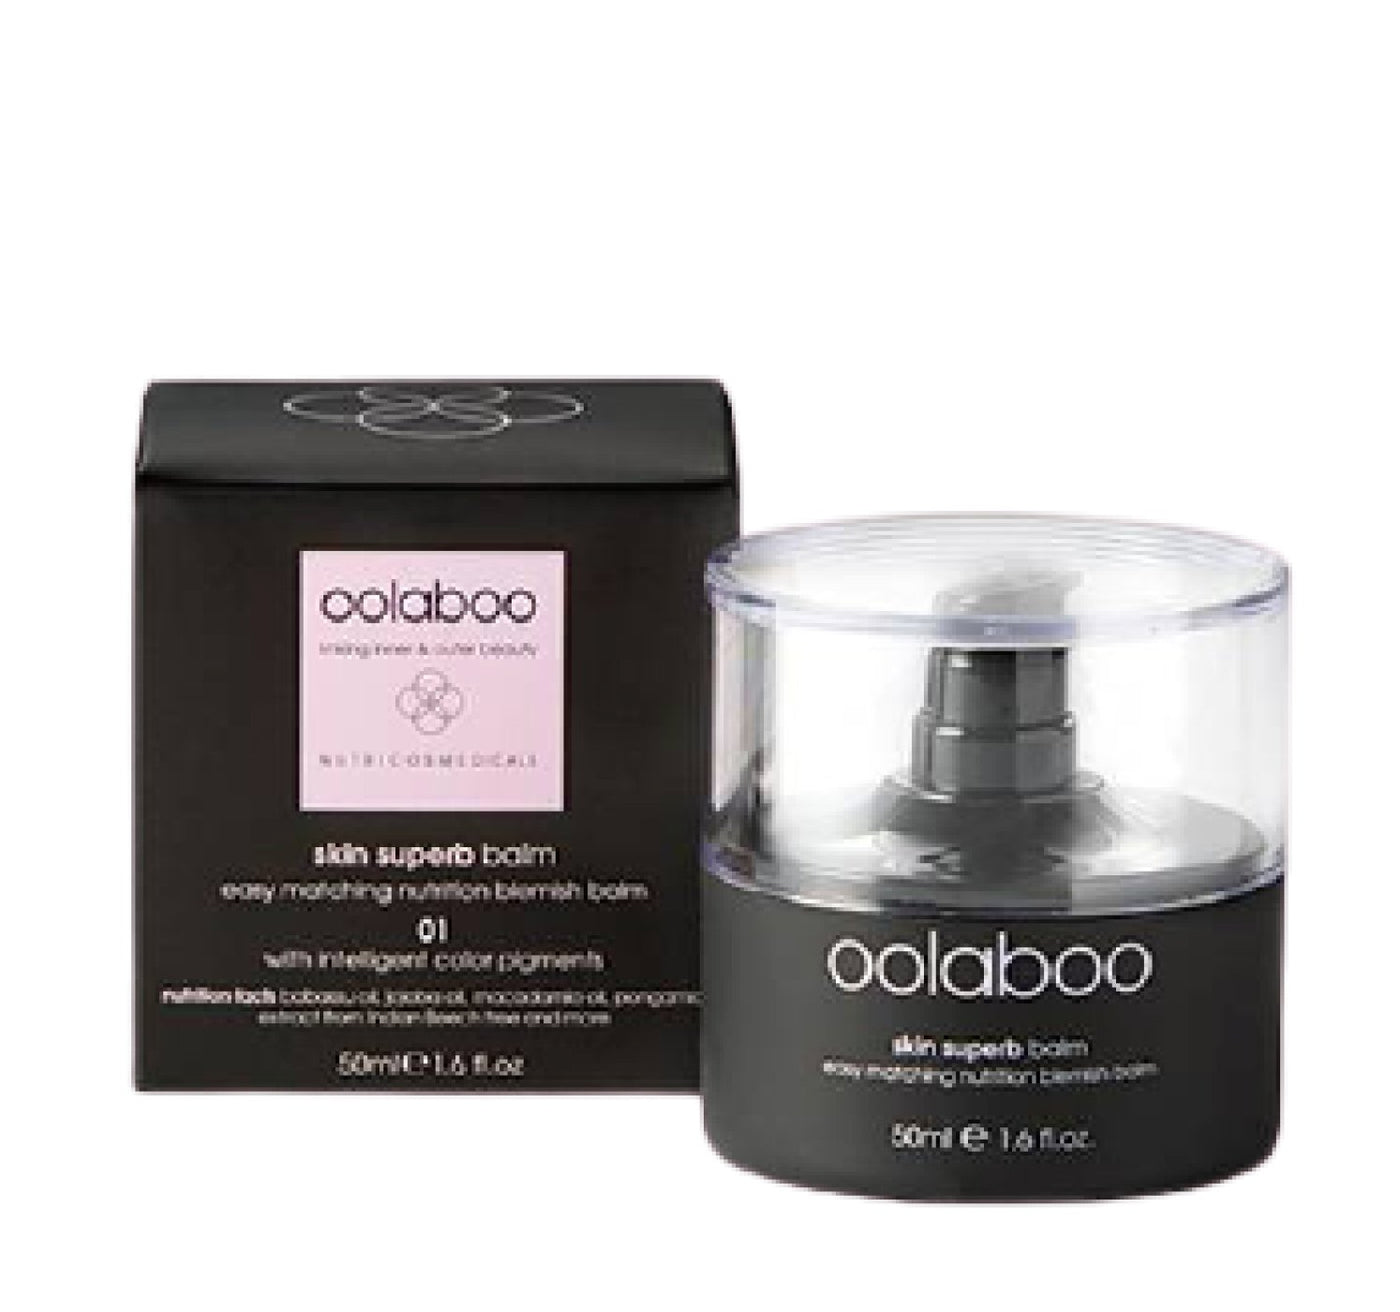 Oolaboo Skin Superb Blemish Balm (Bb Cream) 50 ml - Salon Warehouse